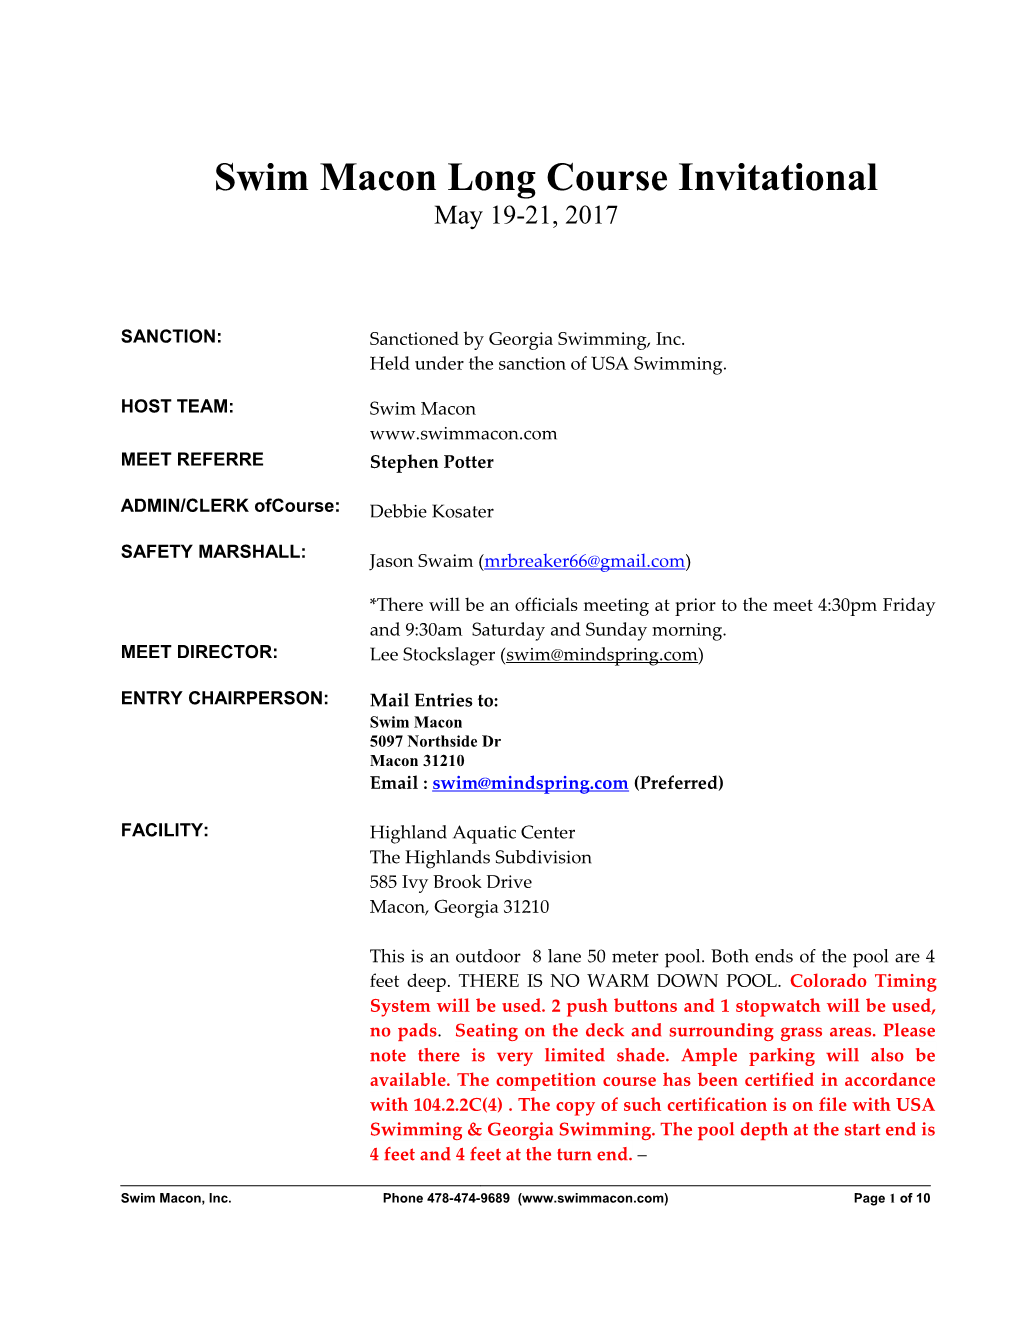 Meet Information Sheetmay 19-21, 2017Swim Macon Long Course Invite